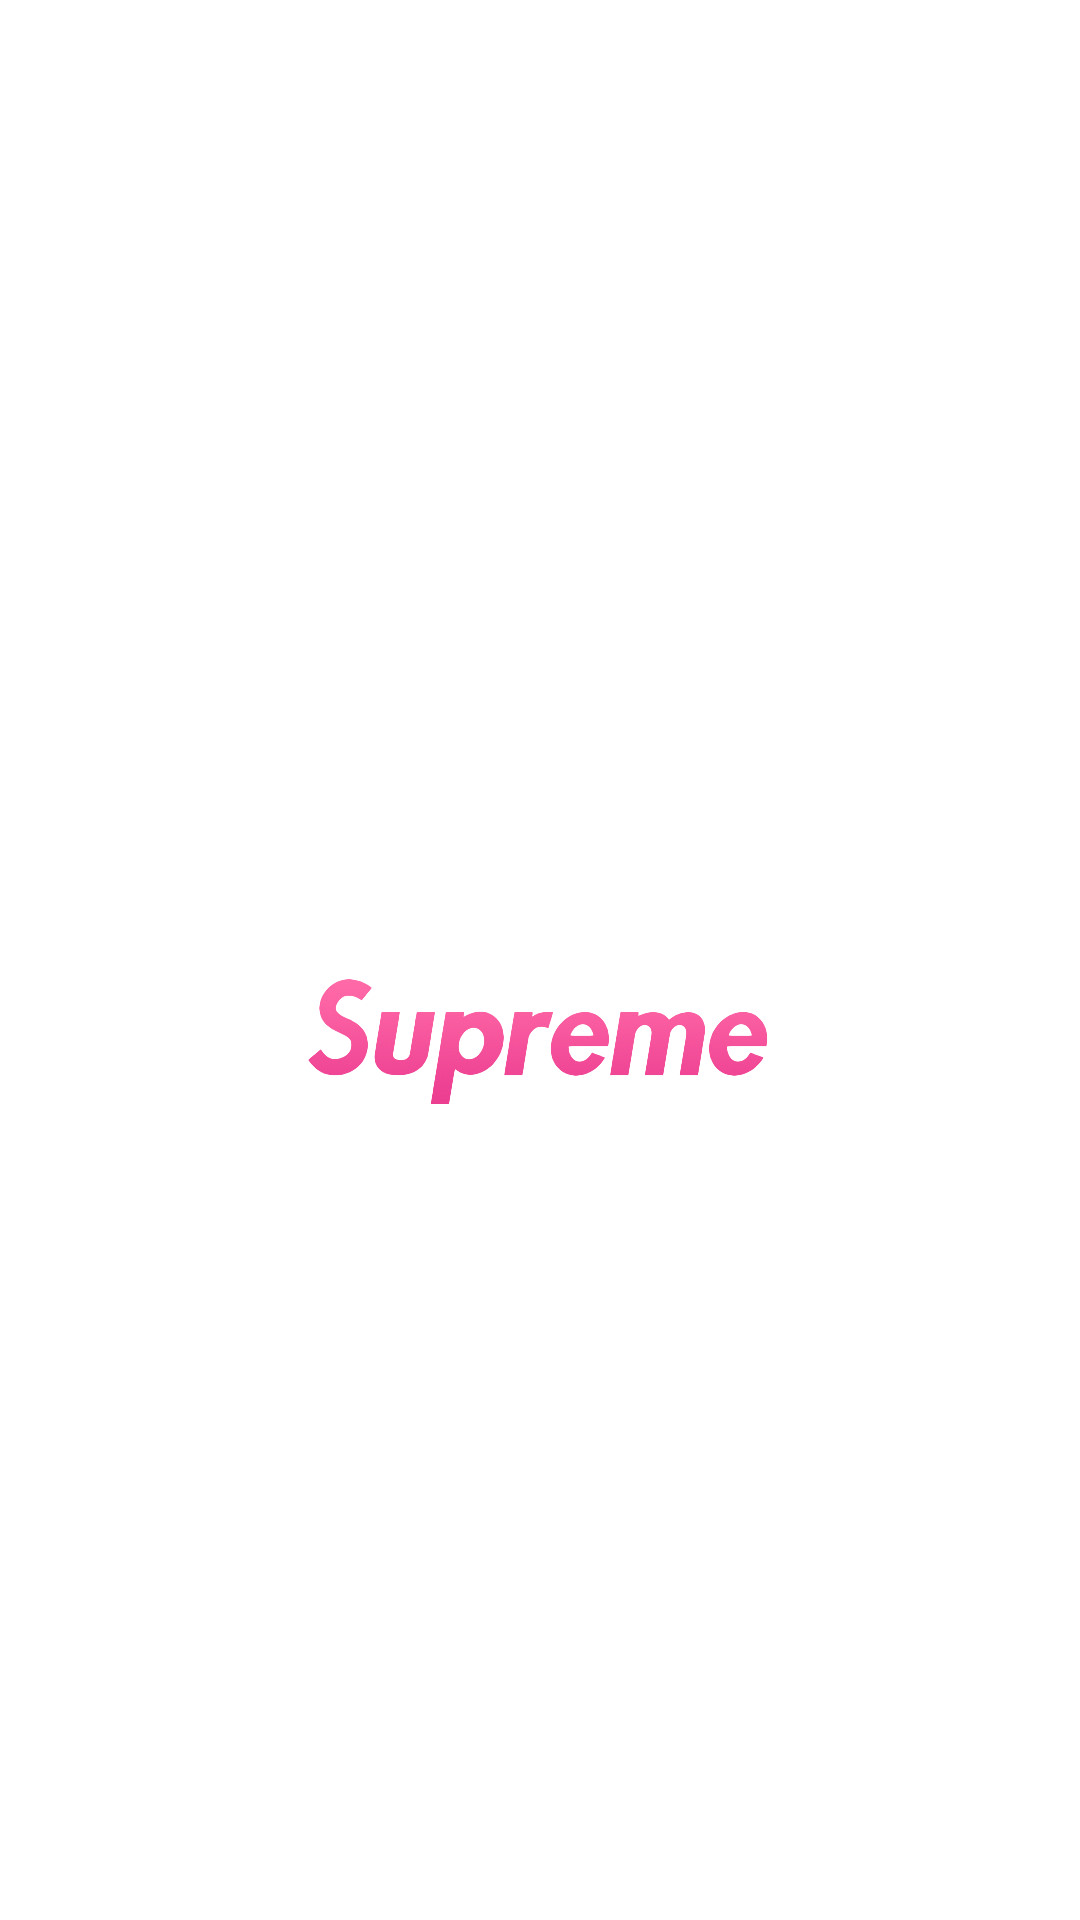 supreme14 - Supreme[シュプリーム]の高画質スマホ壁紙23枚 [iPhone＆Androidに対応]